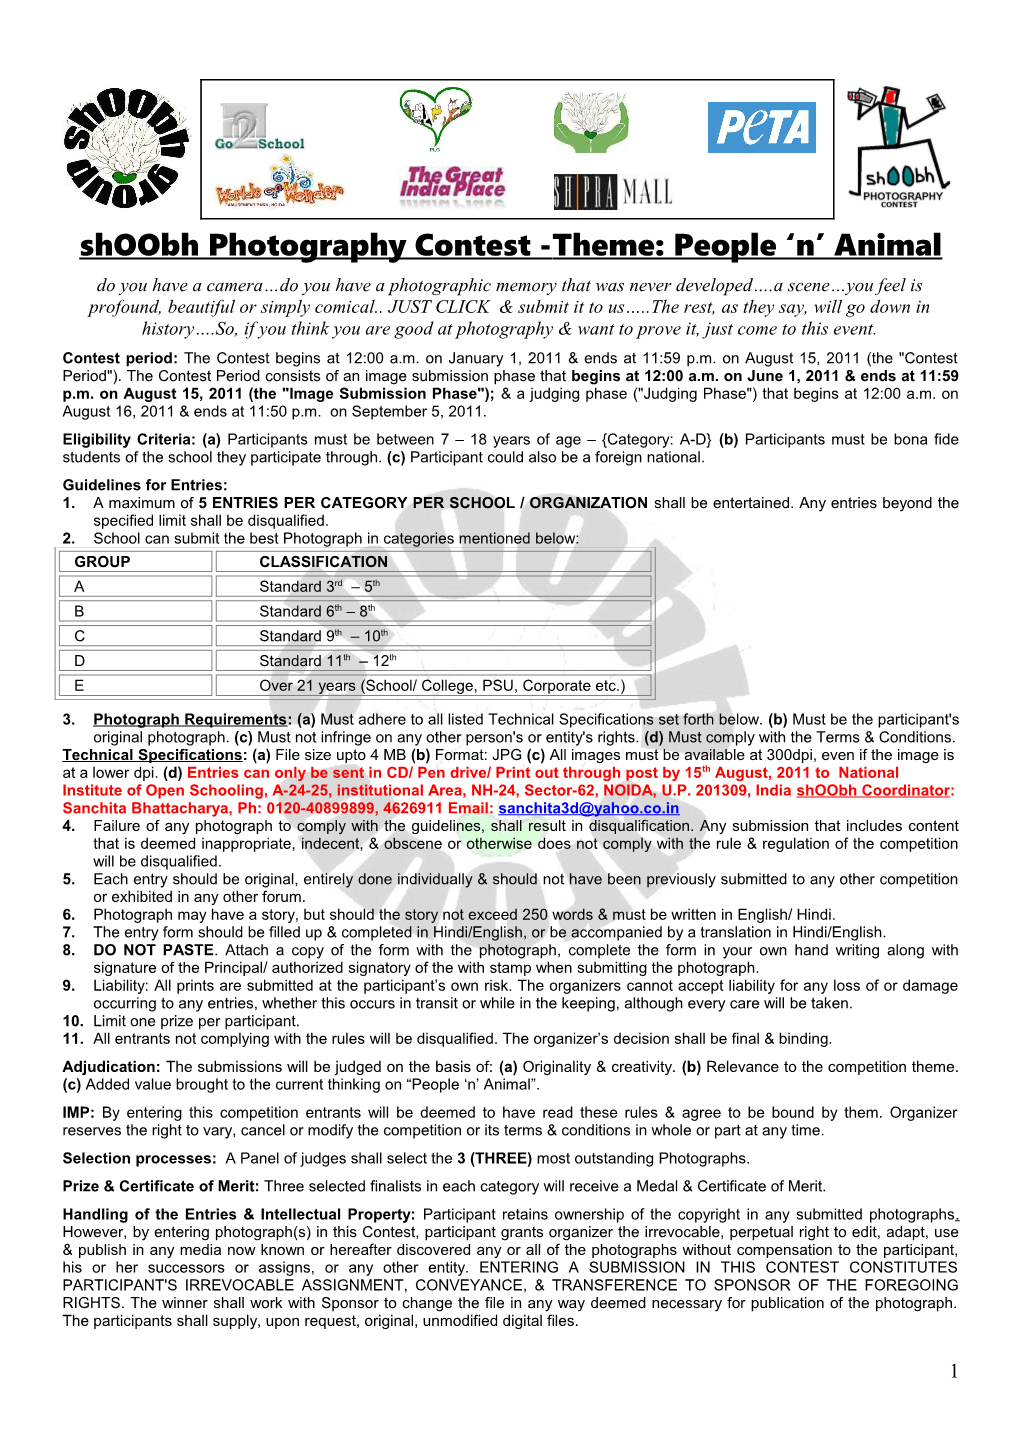 Shoobh Photography Contest -Theme: People N Animal